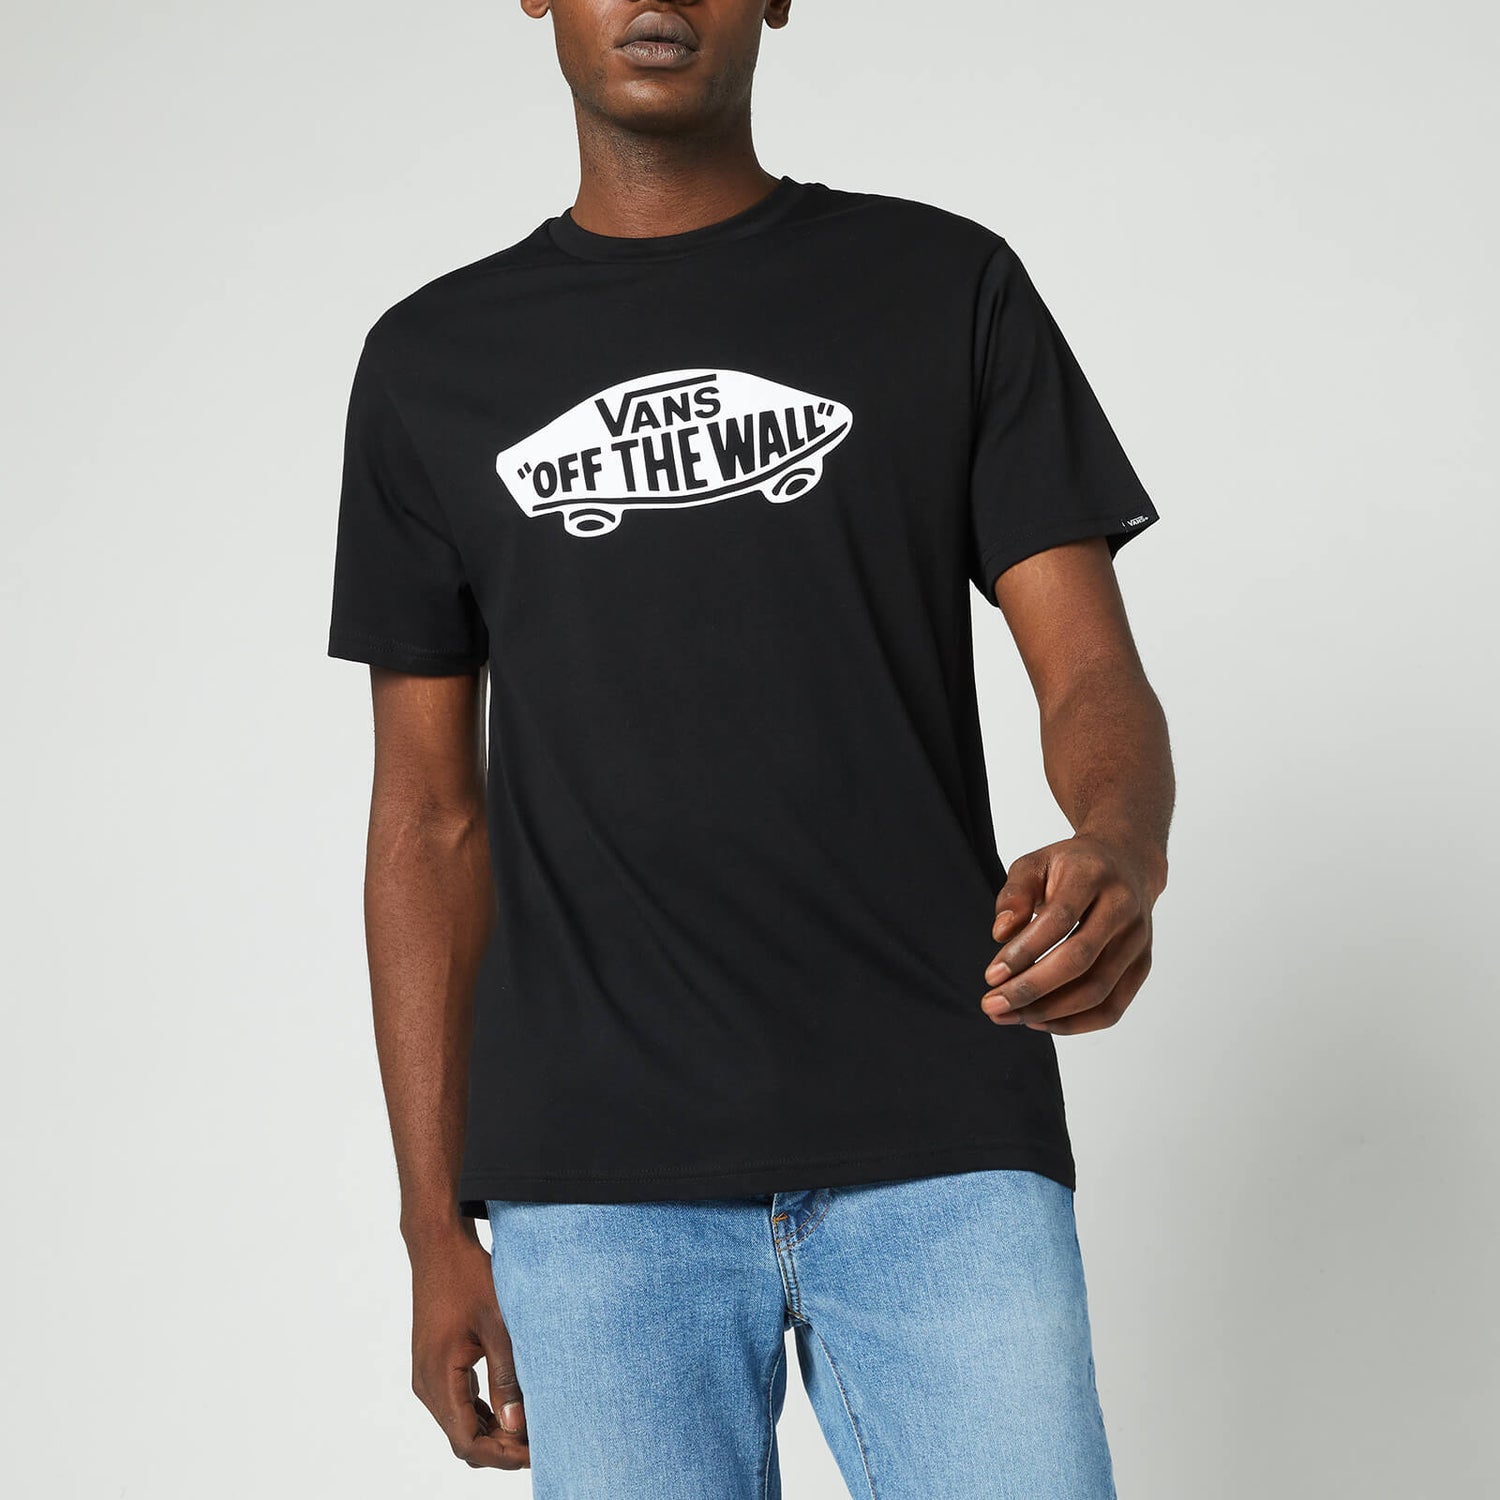 Vans Men's Otw Crewneck T-Shirt - Black/White